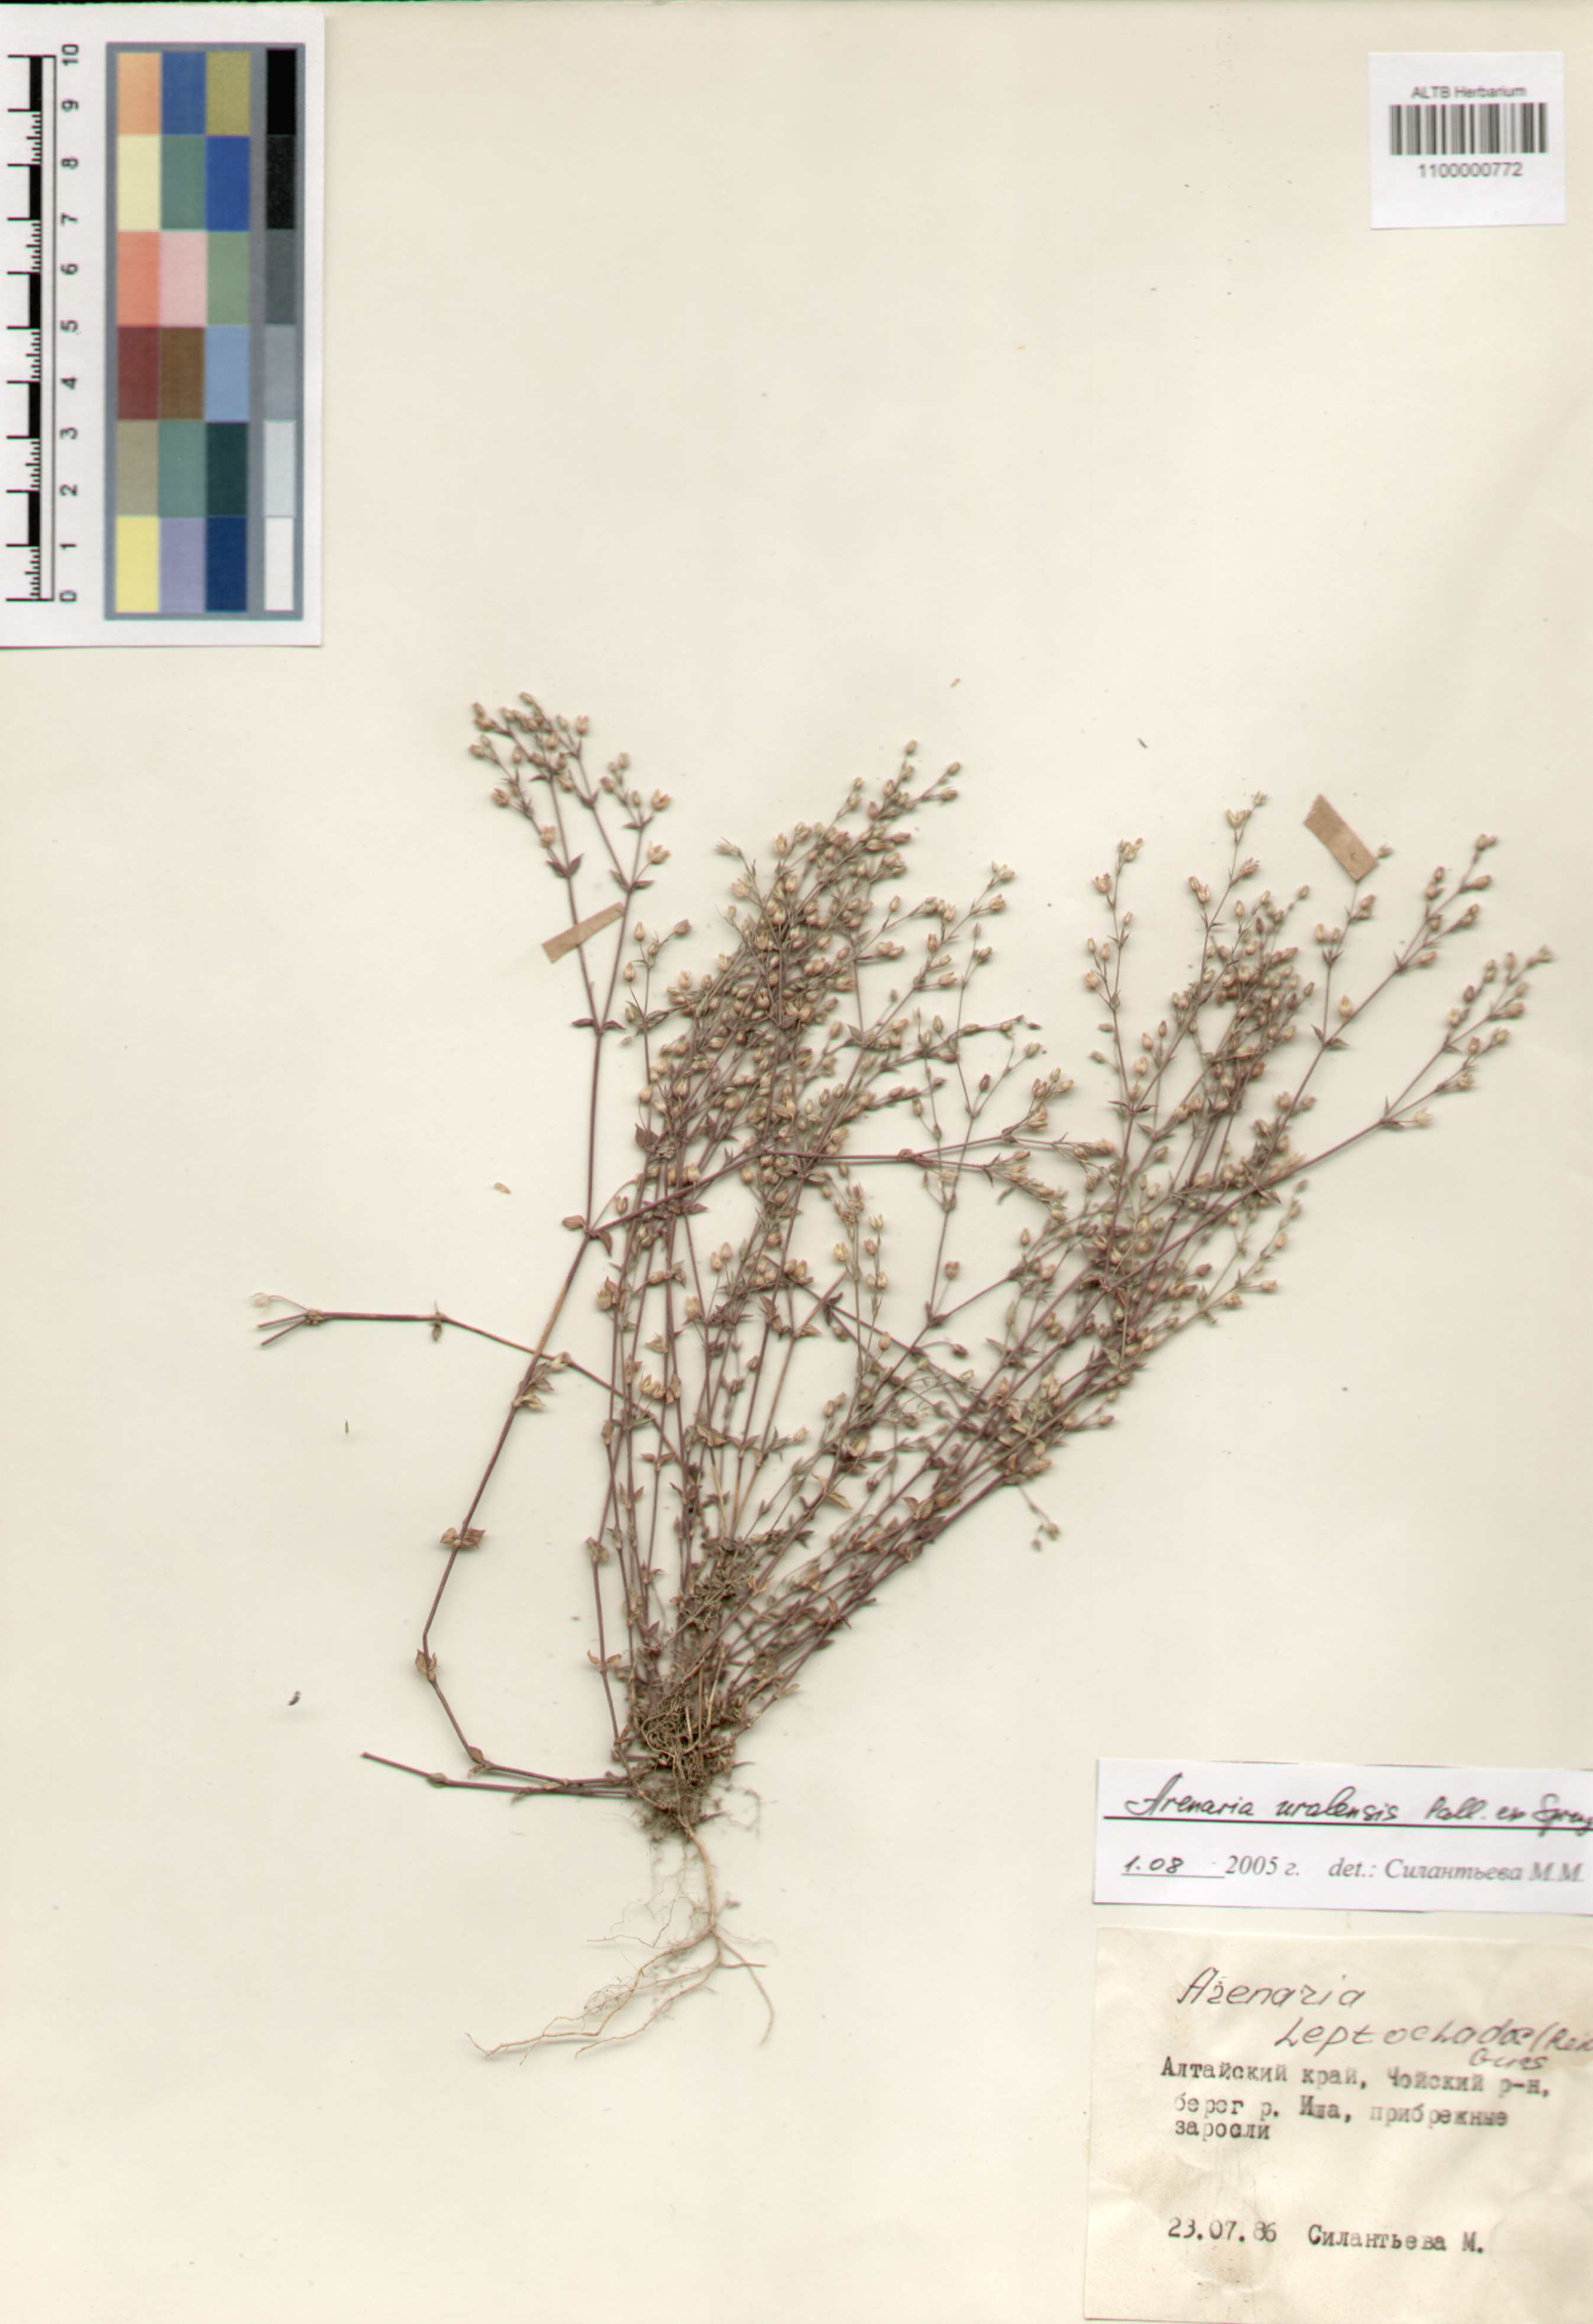 Caryophyllaceae,Arenaria serpyllifolia L.